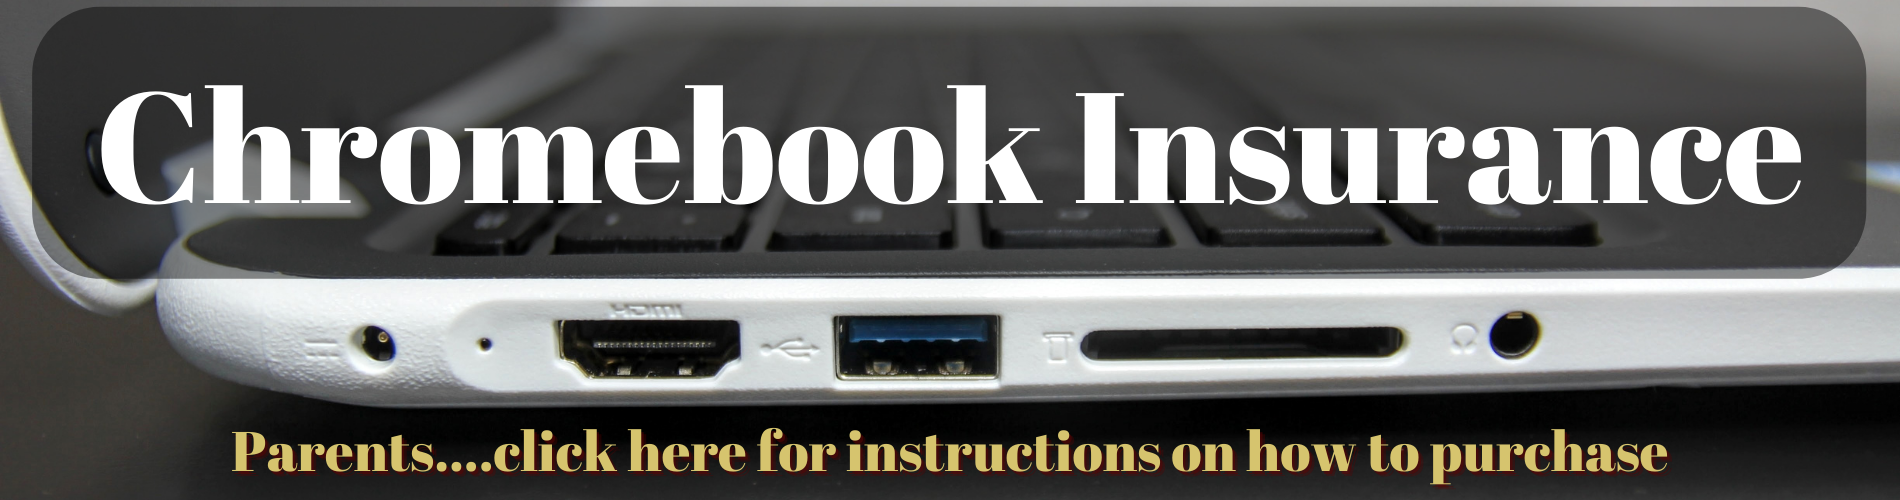 chromebook insurance instructions 